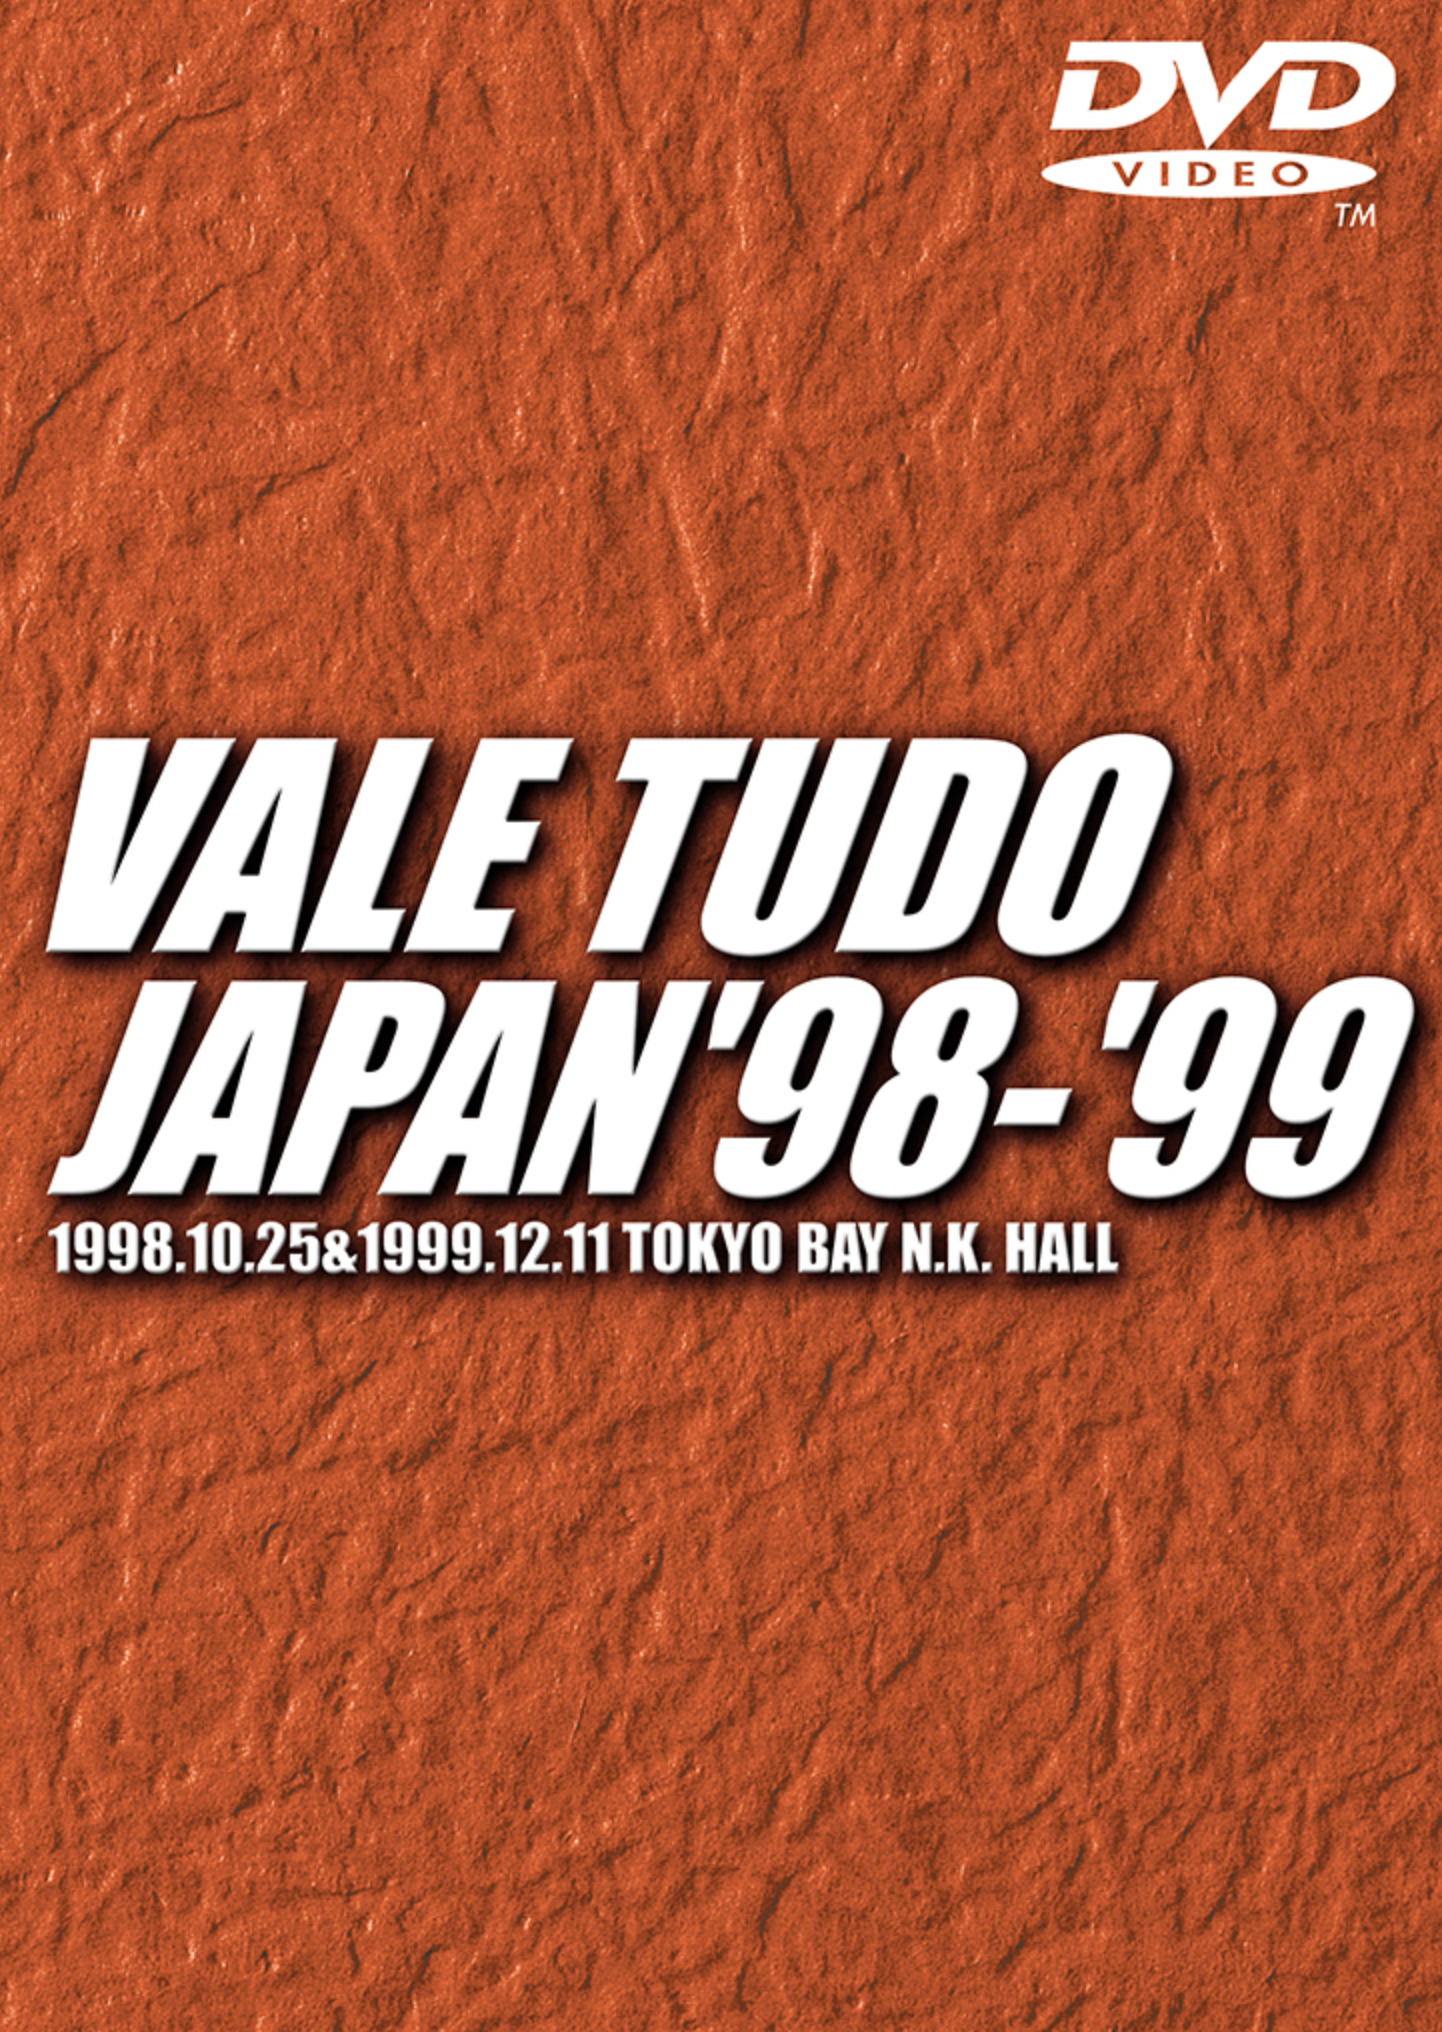 Vale Tudo Japan 98-99 DVD - Budovideos Inc